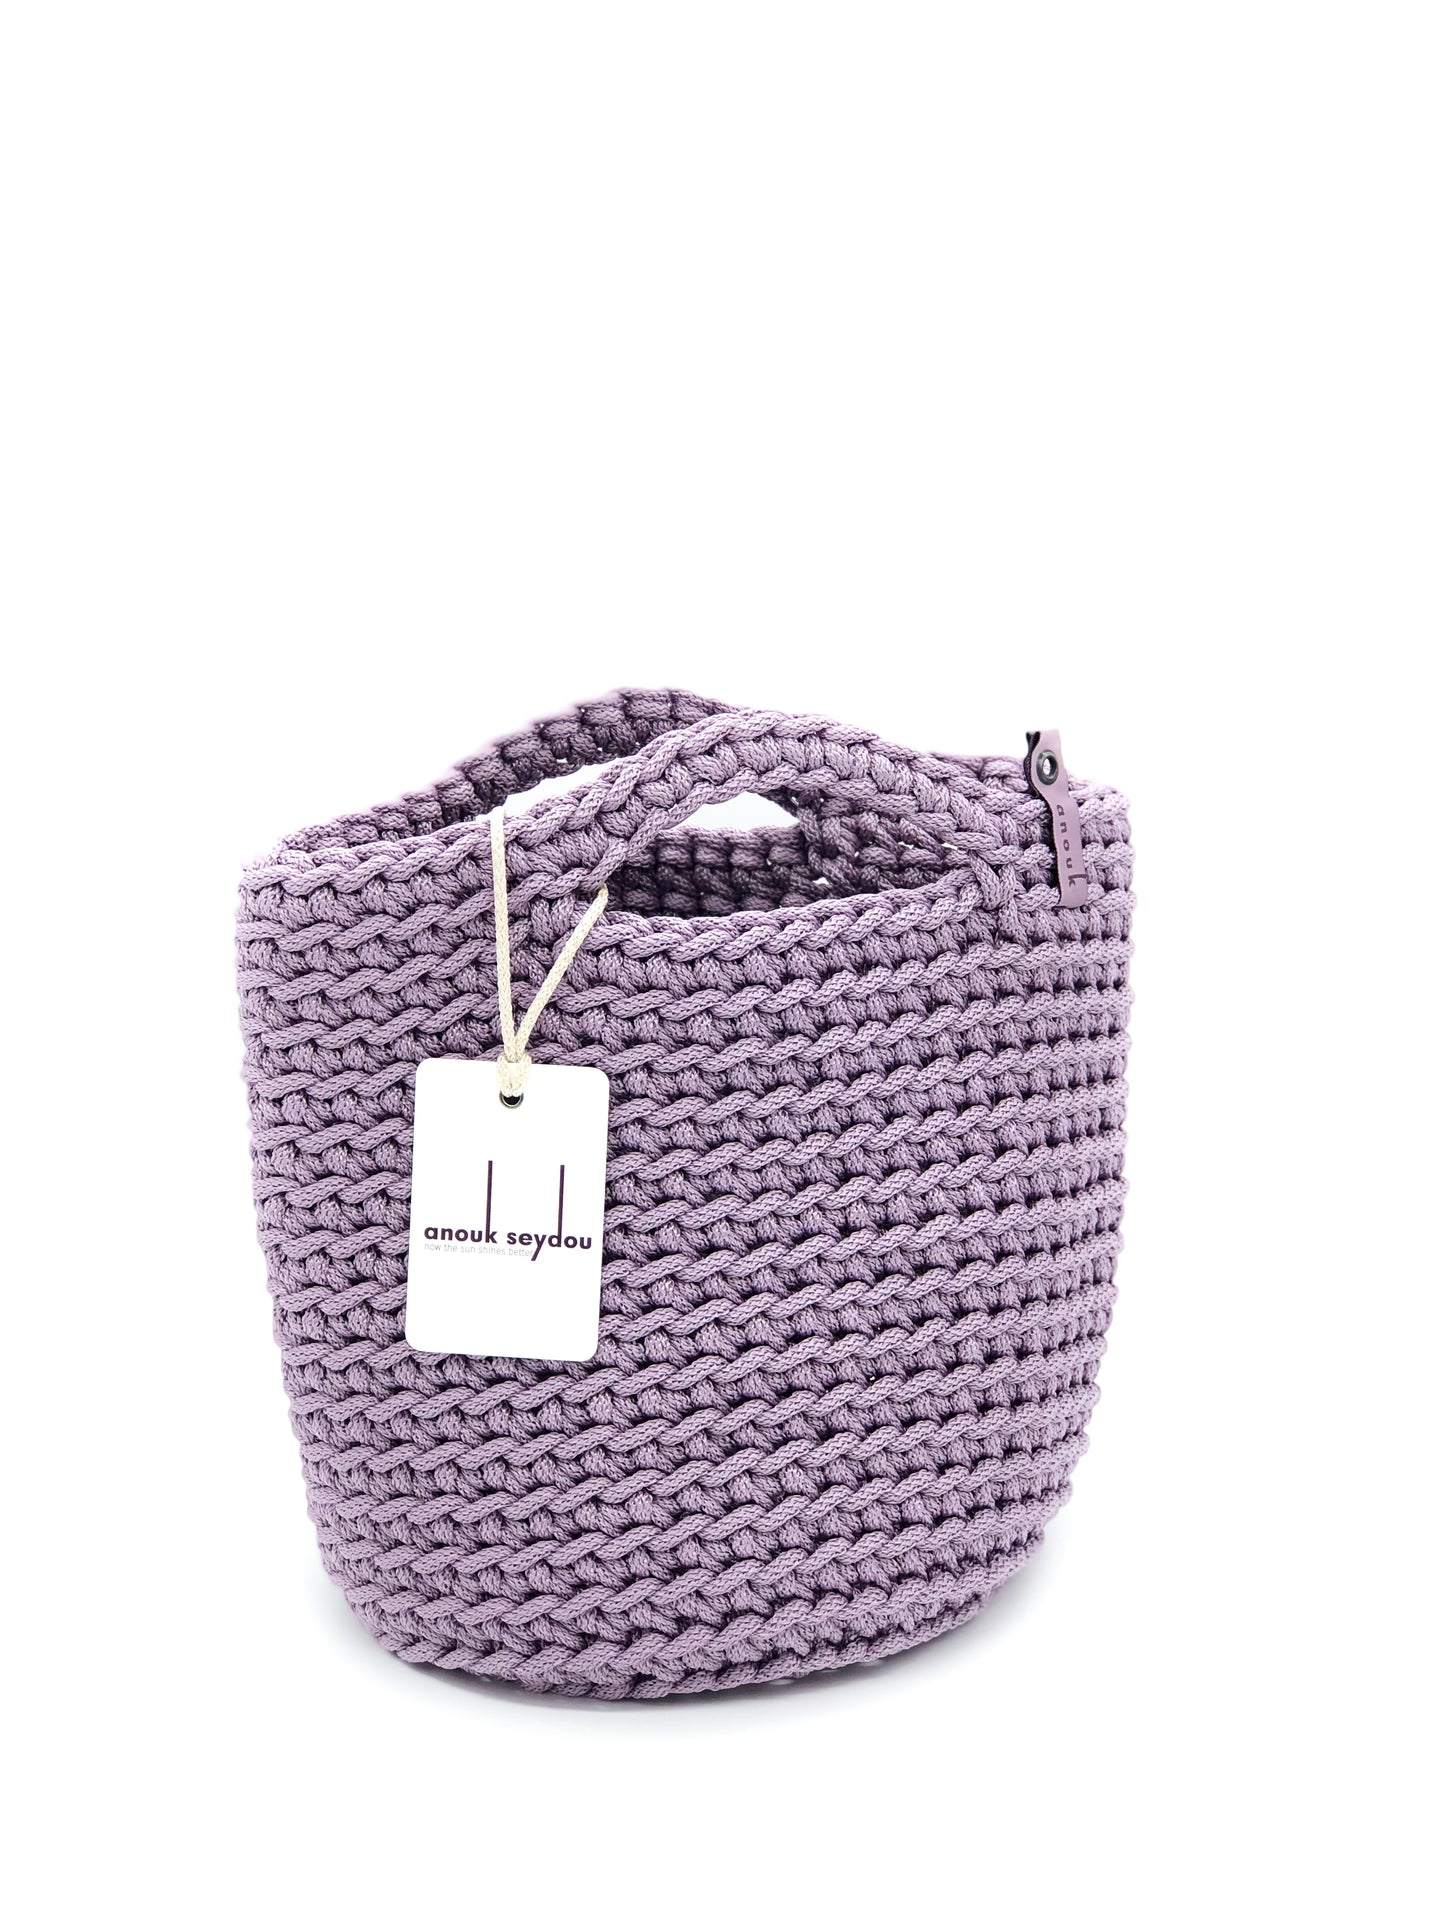 Scandinavian Style Handmade Crochet Tote Bag with Short Handles Glossy Lilac